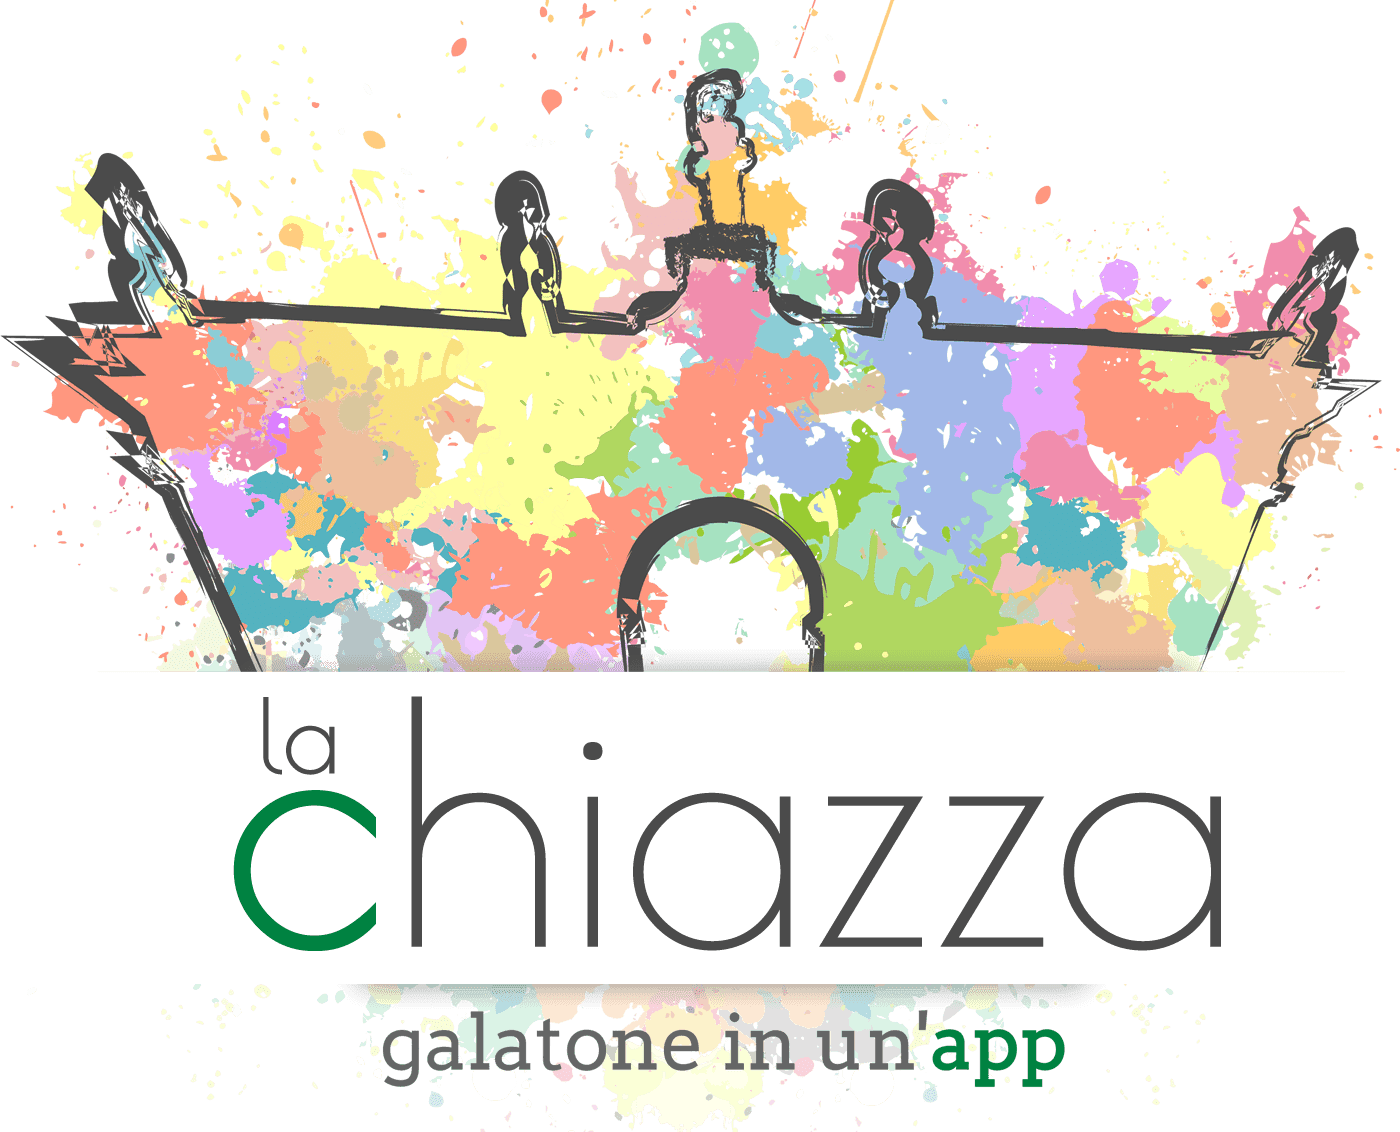 La Chiazza